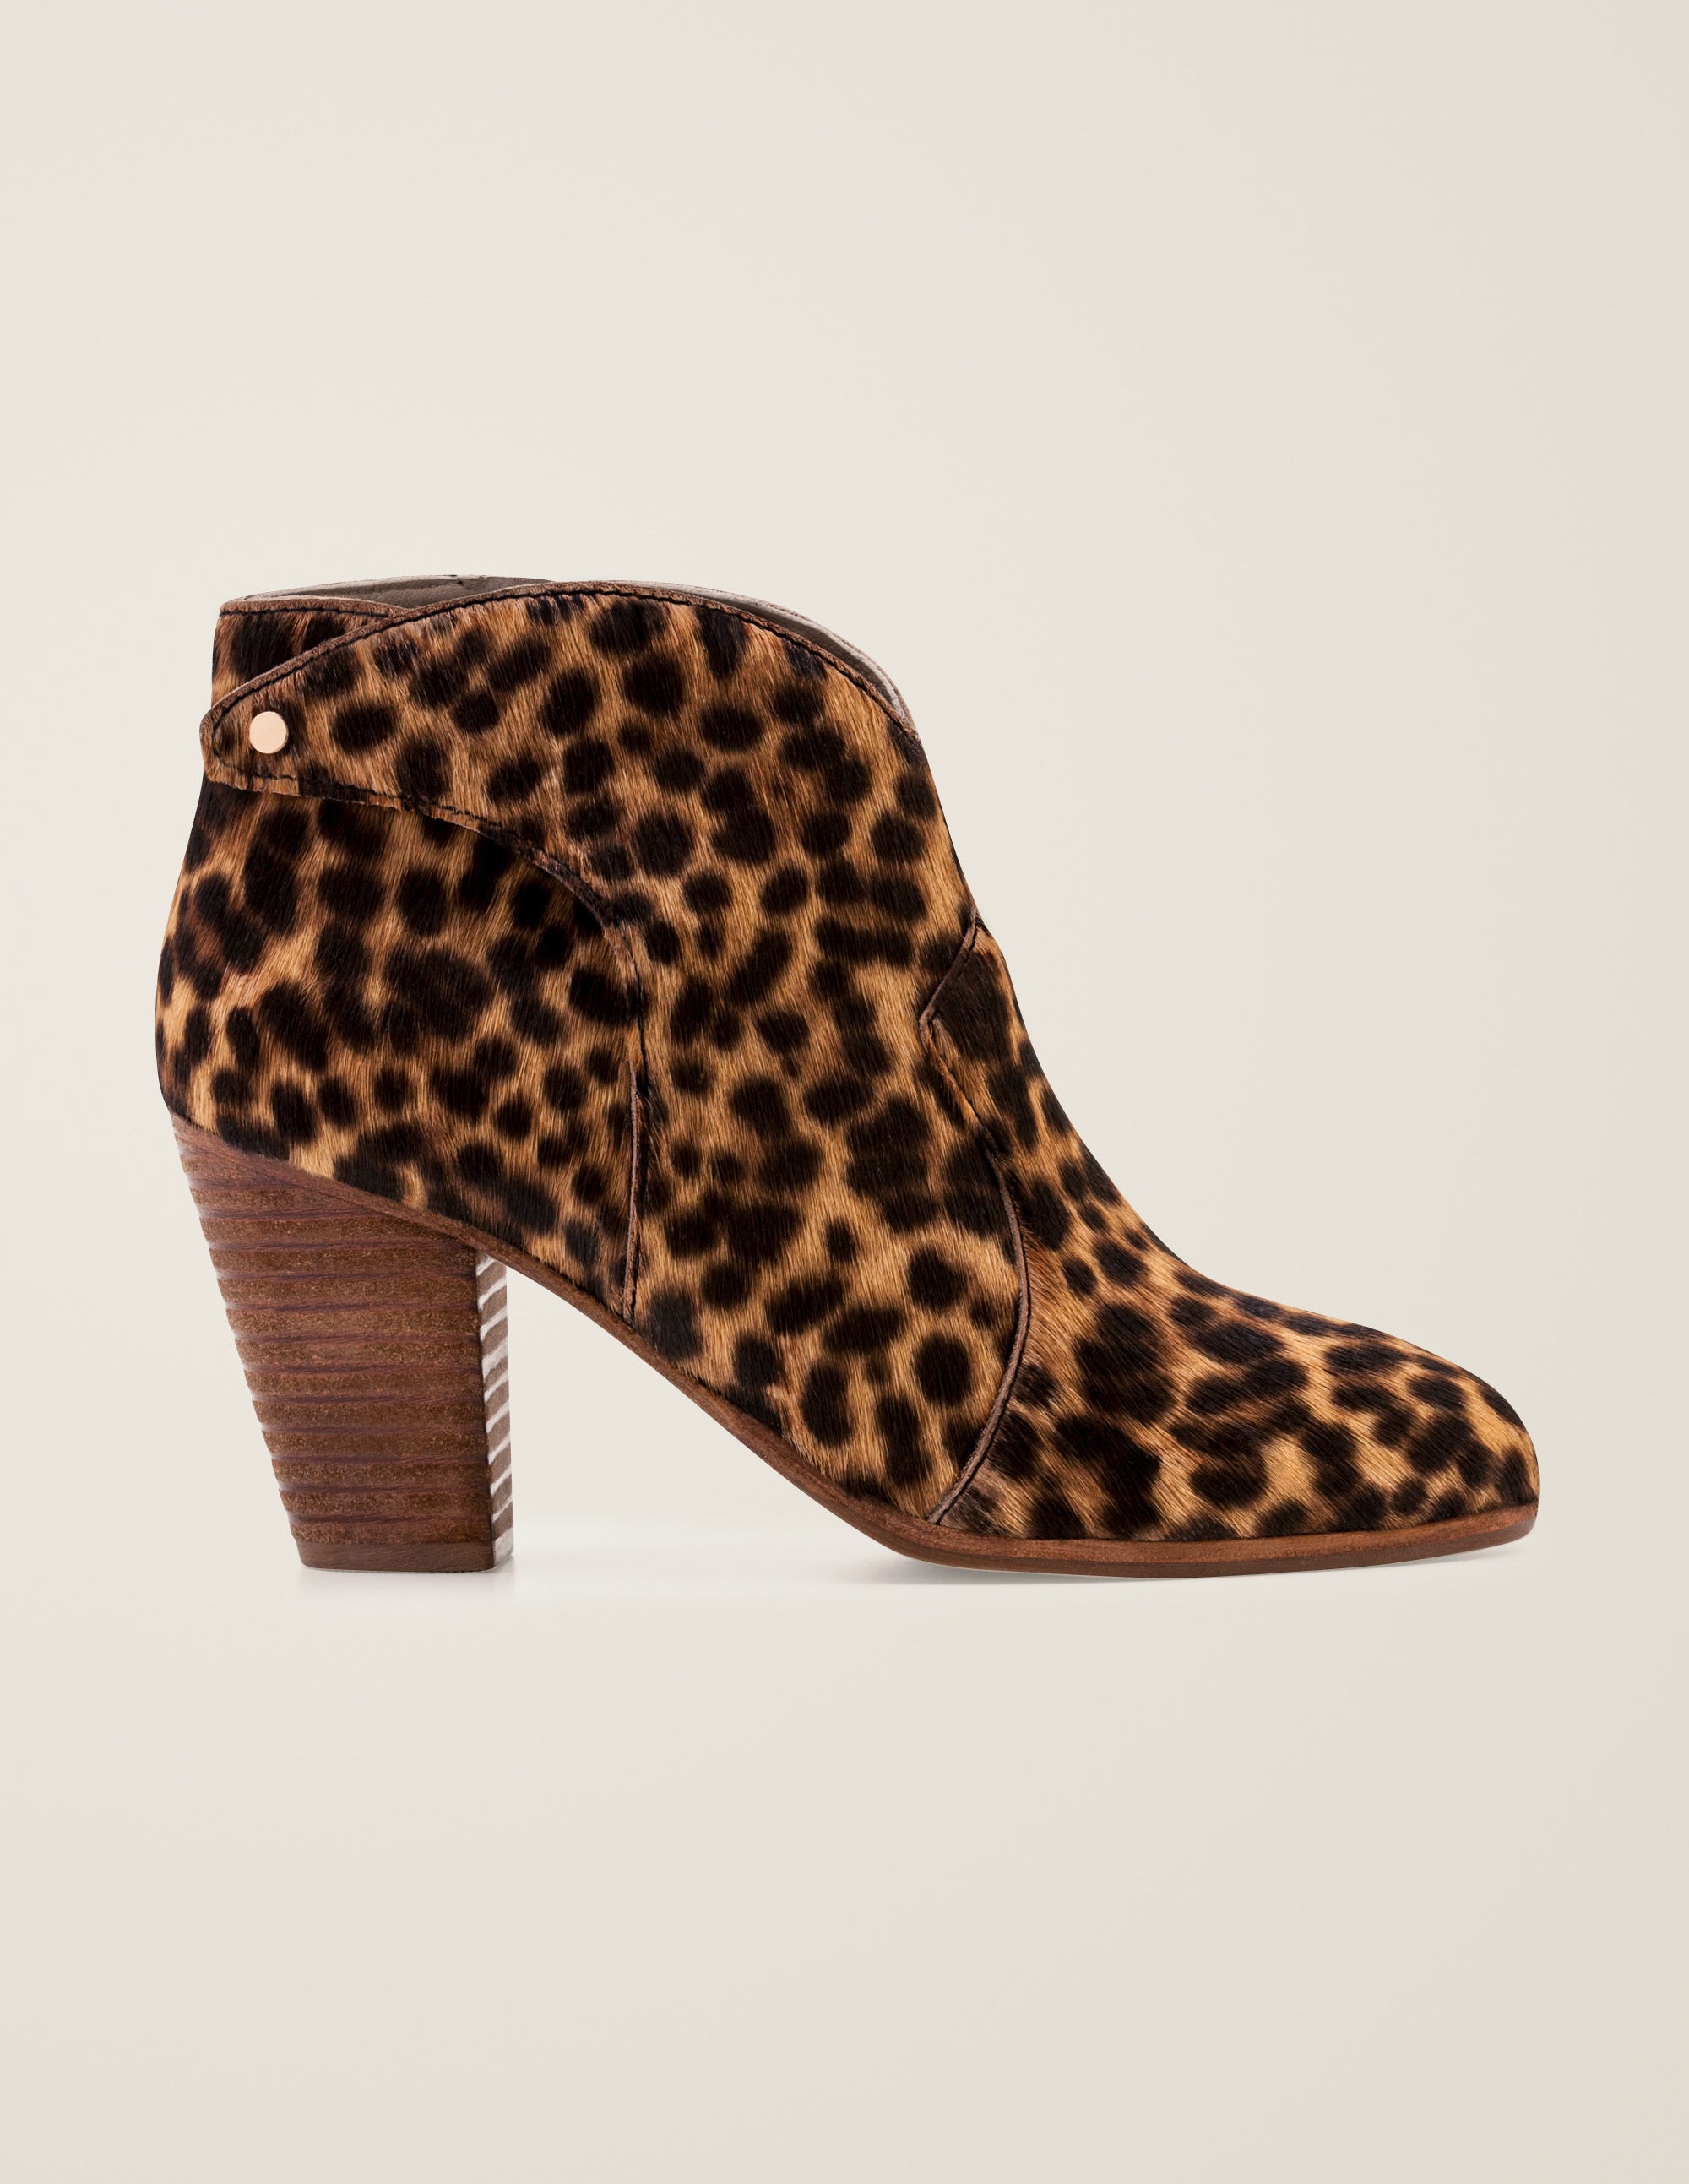 Hoxton Ankle Boots - Tan Leopard | Boden UK